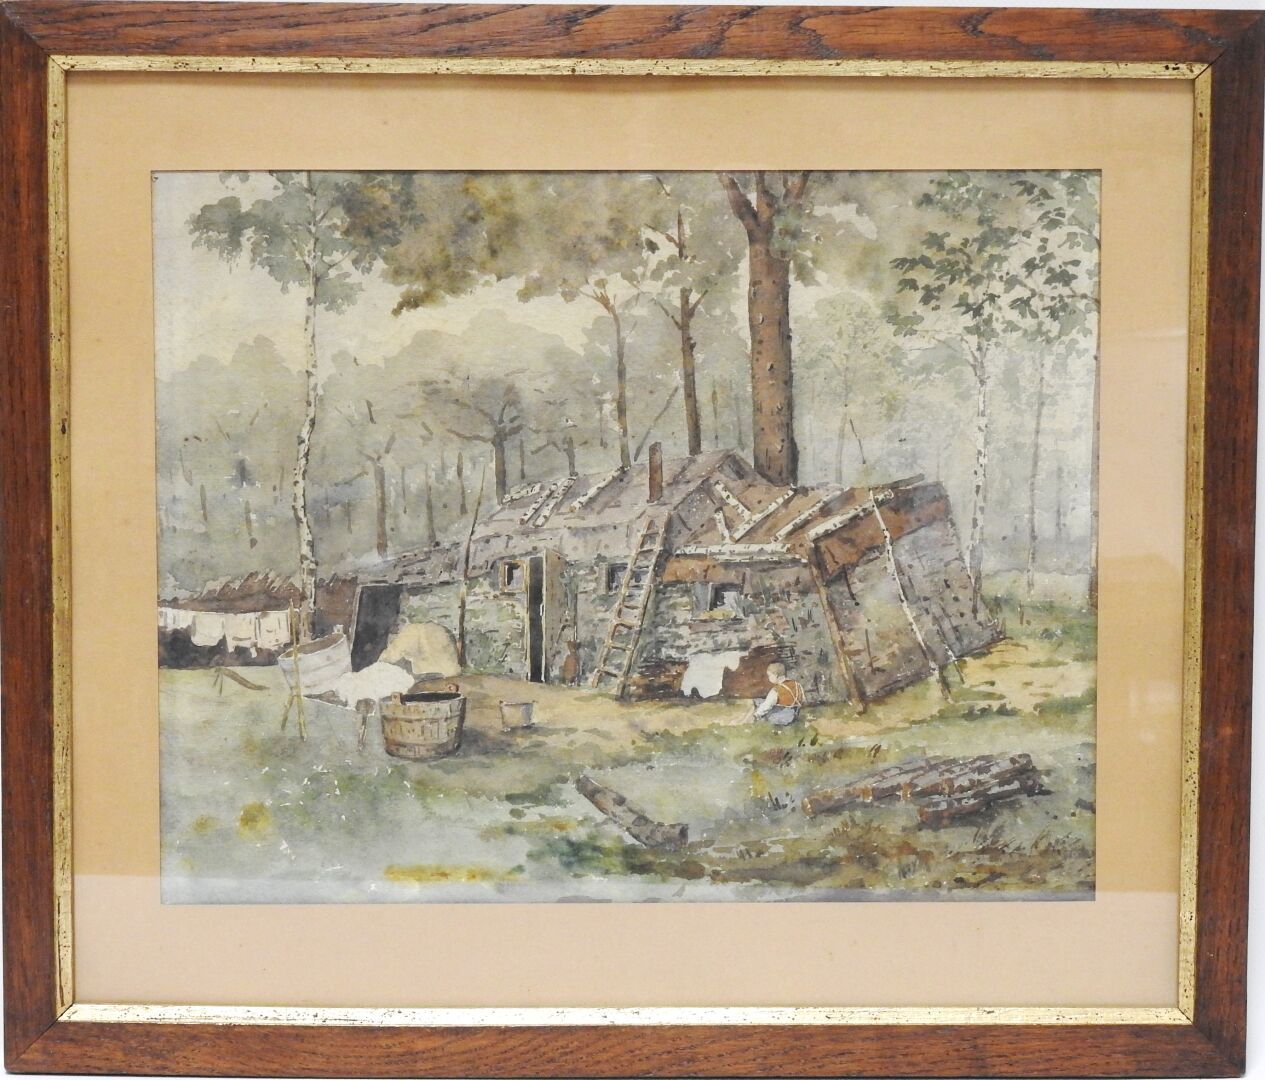 Null 法国学校--19世纪
树林中的小屋
水彩画
32 x 41 cm at sight